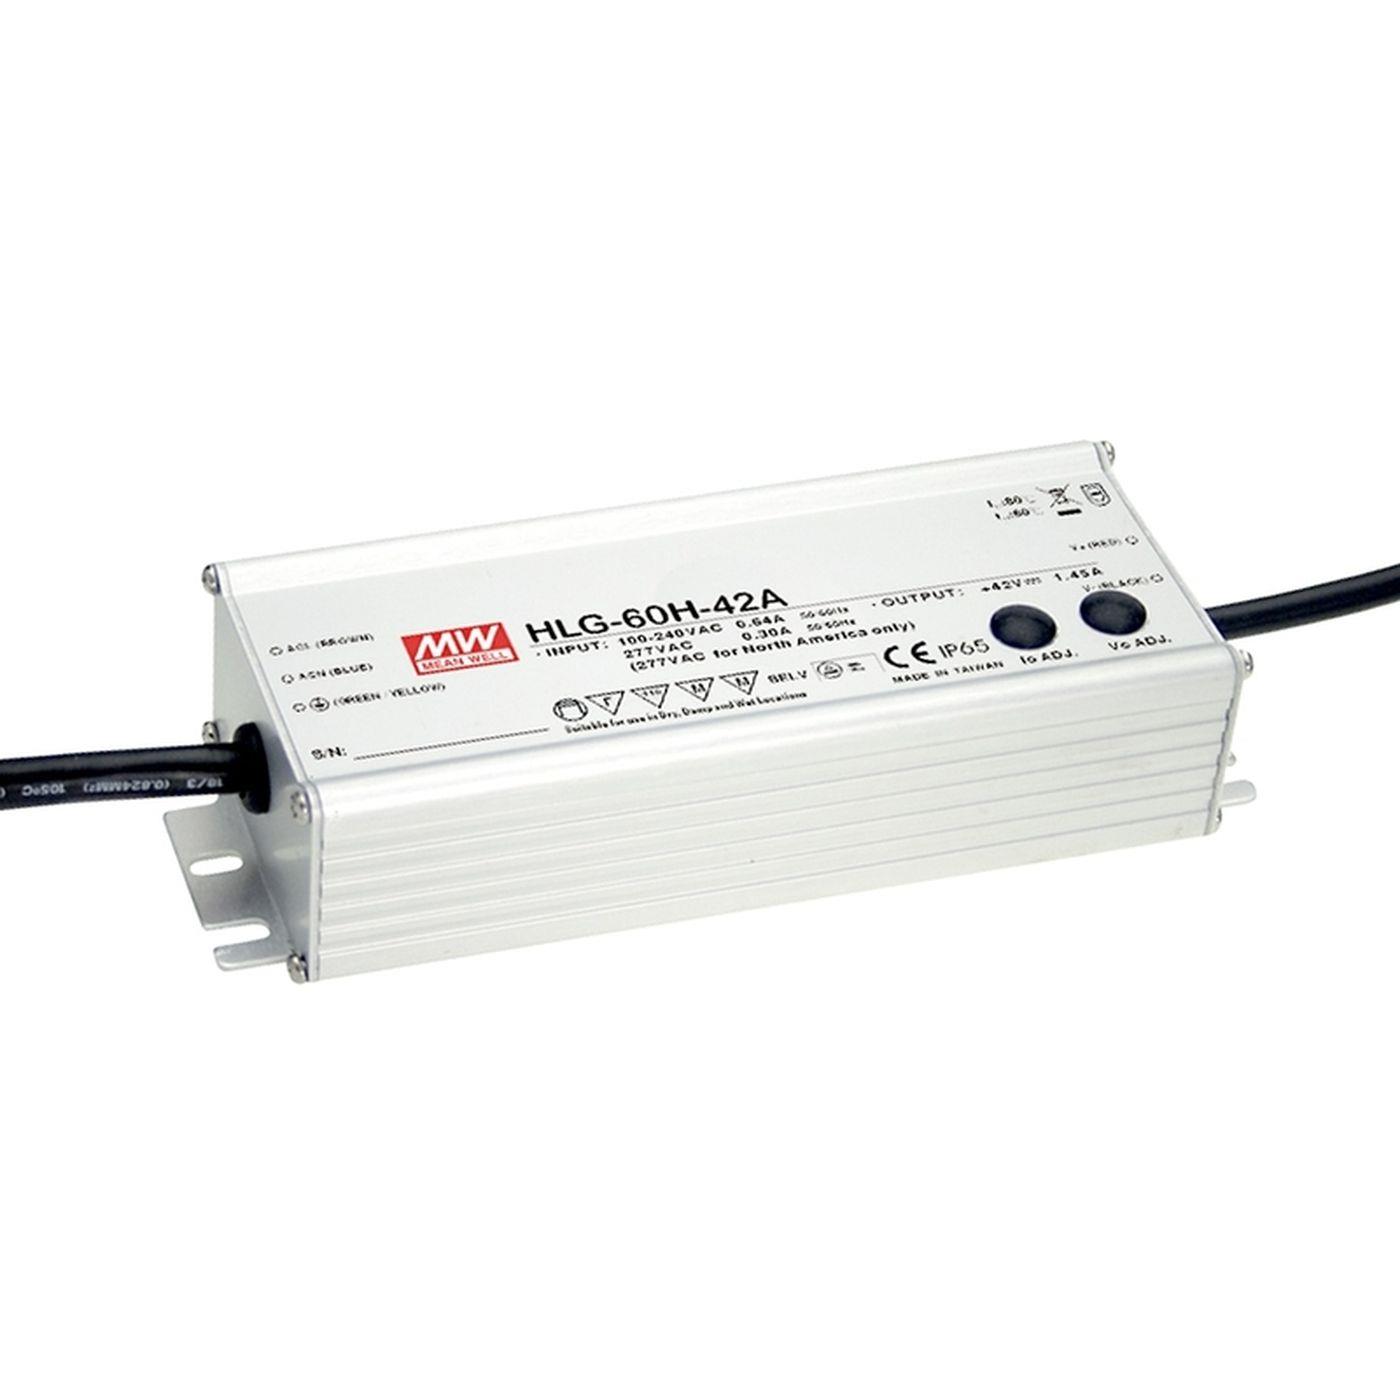 HLG-60H-24B 60W 24V 2,5A LED Netzteil Trafo Treiber IP67 Dimmbar 0-10V PWM